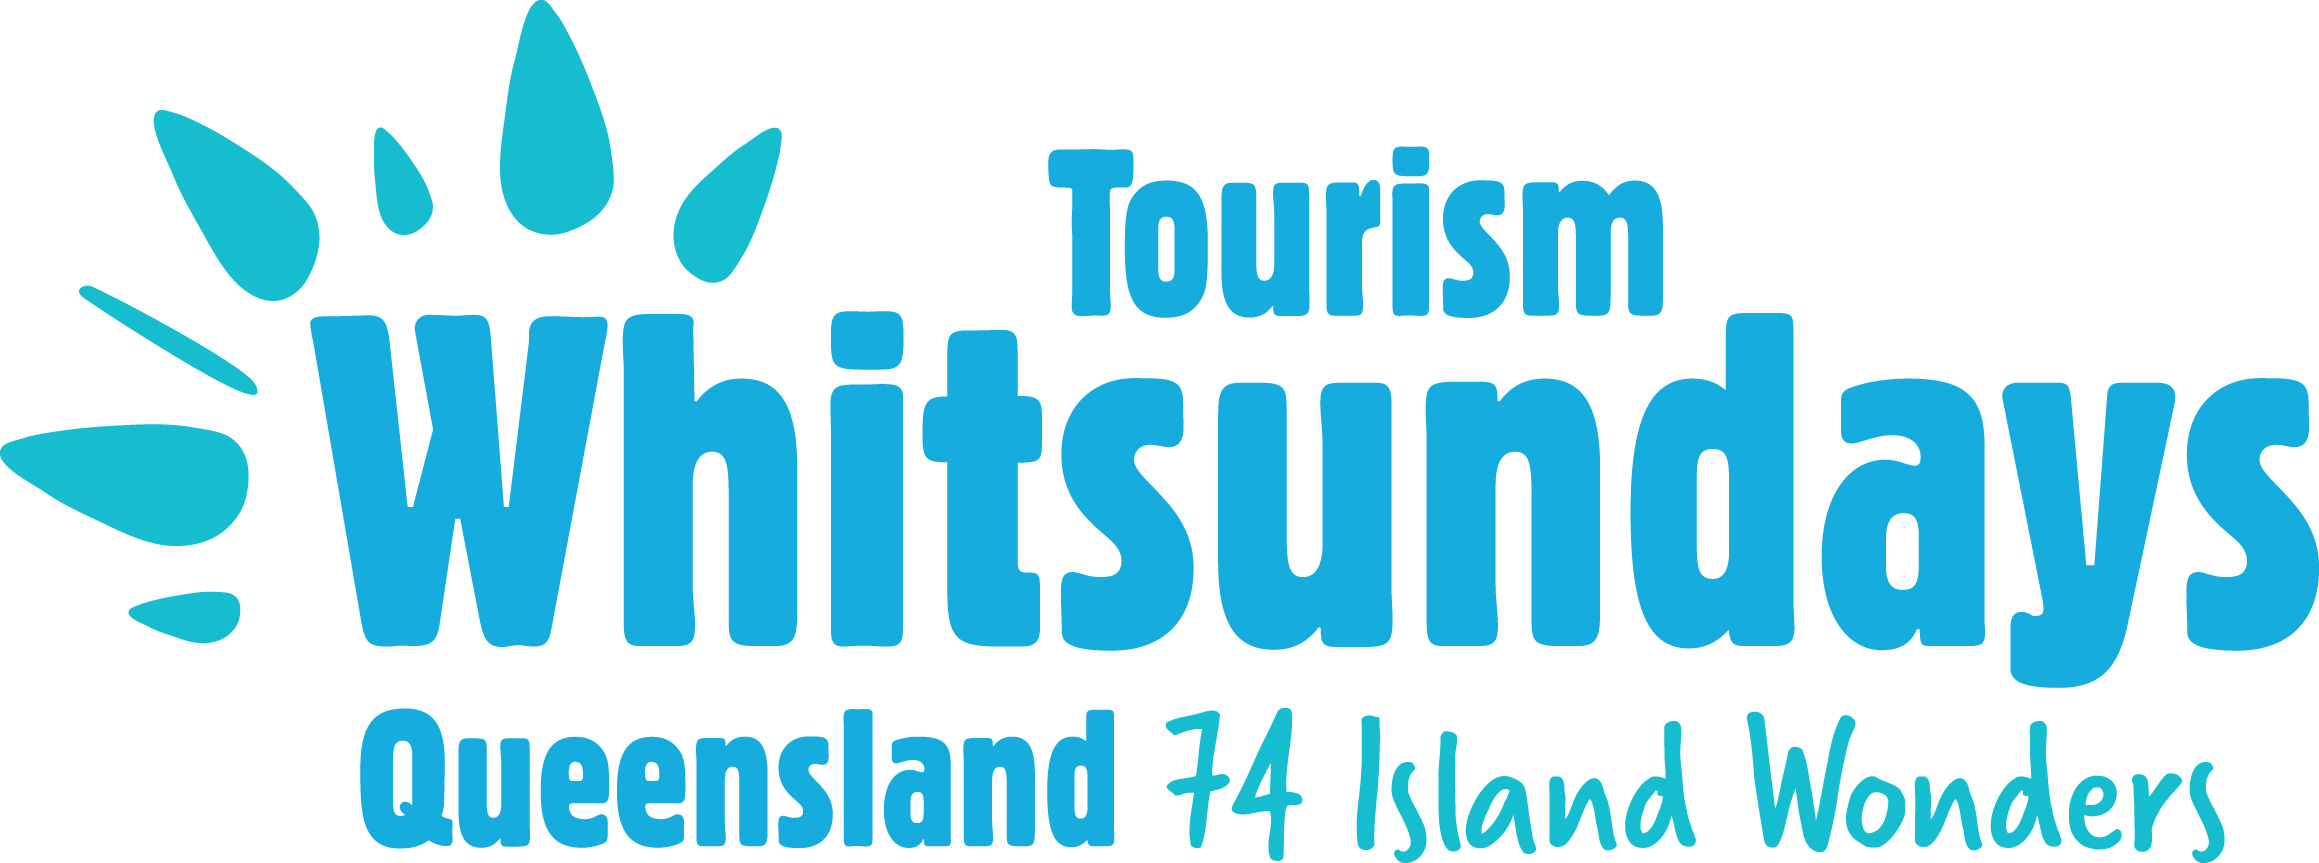 tourism whitsundays logo.jpg